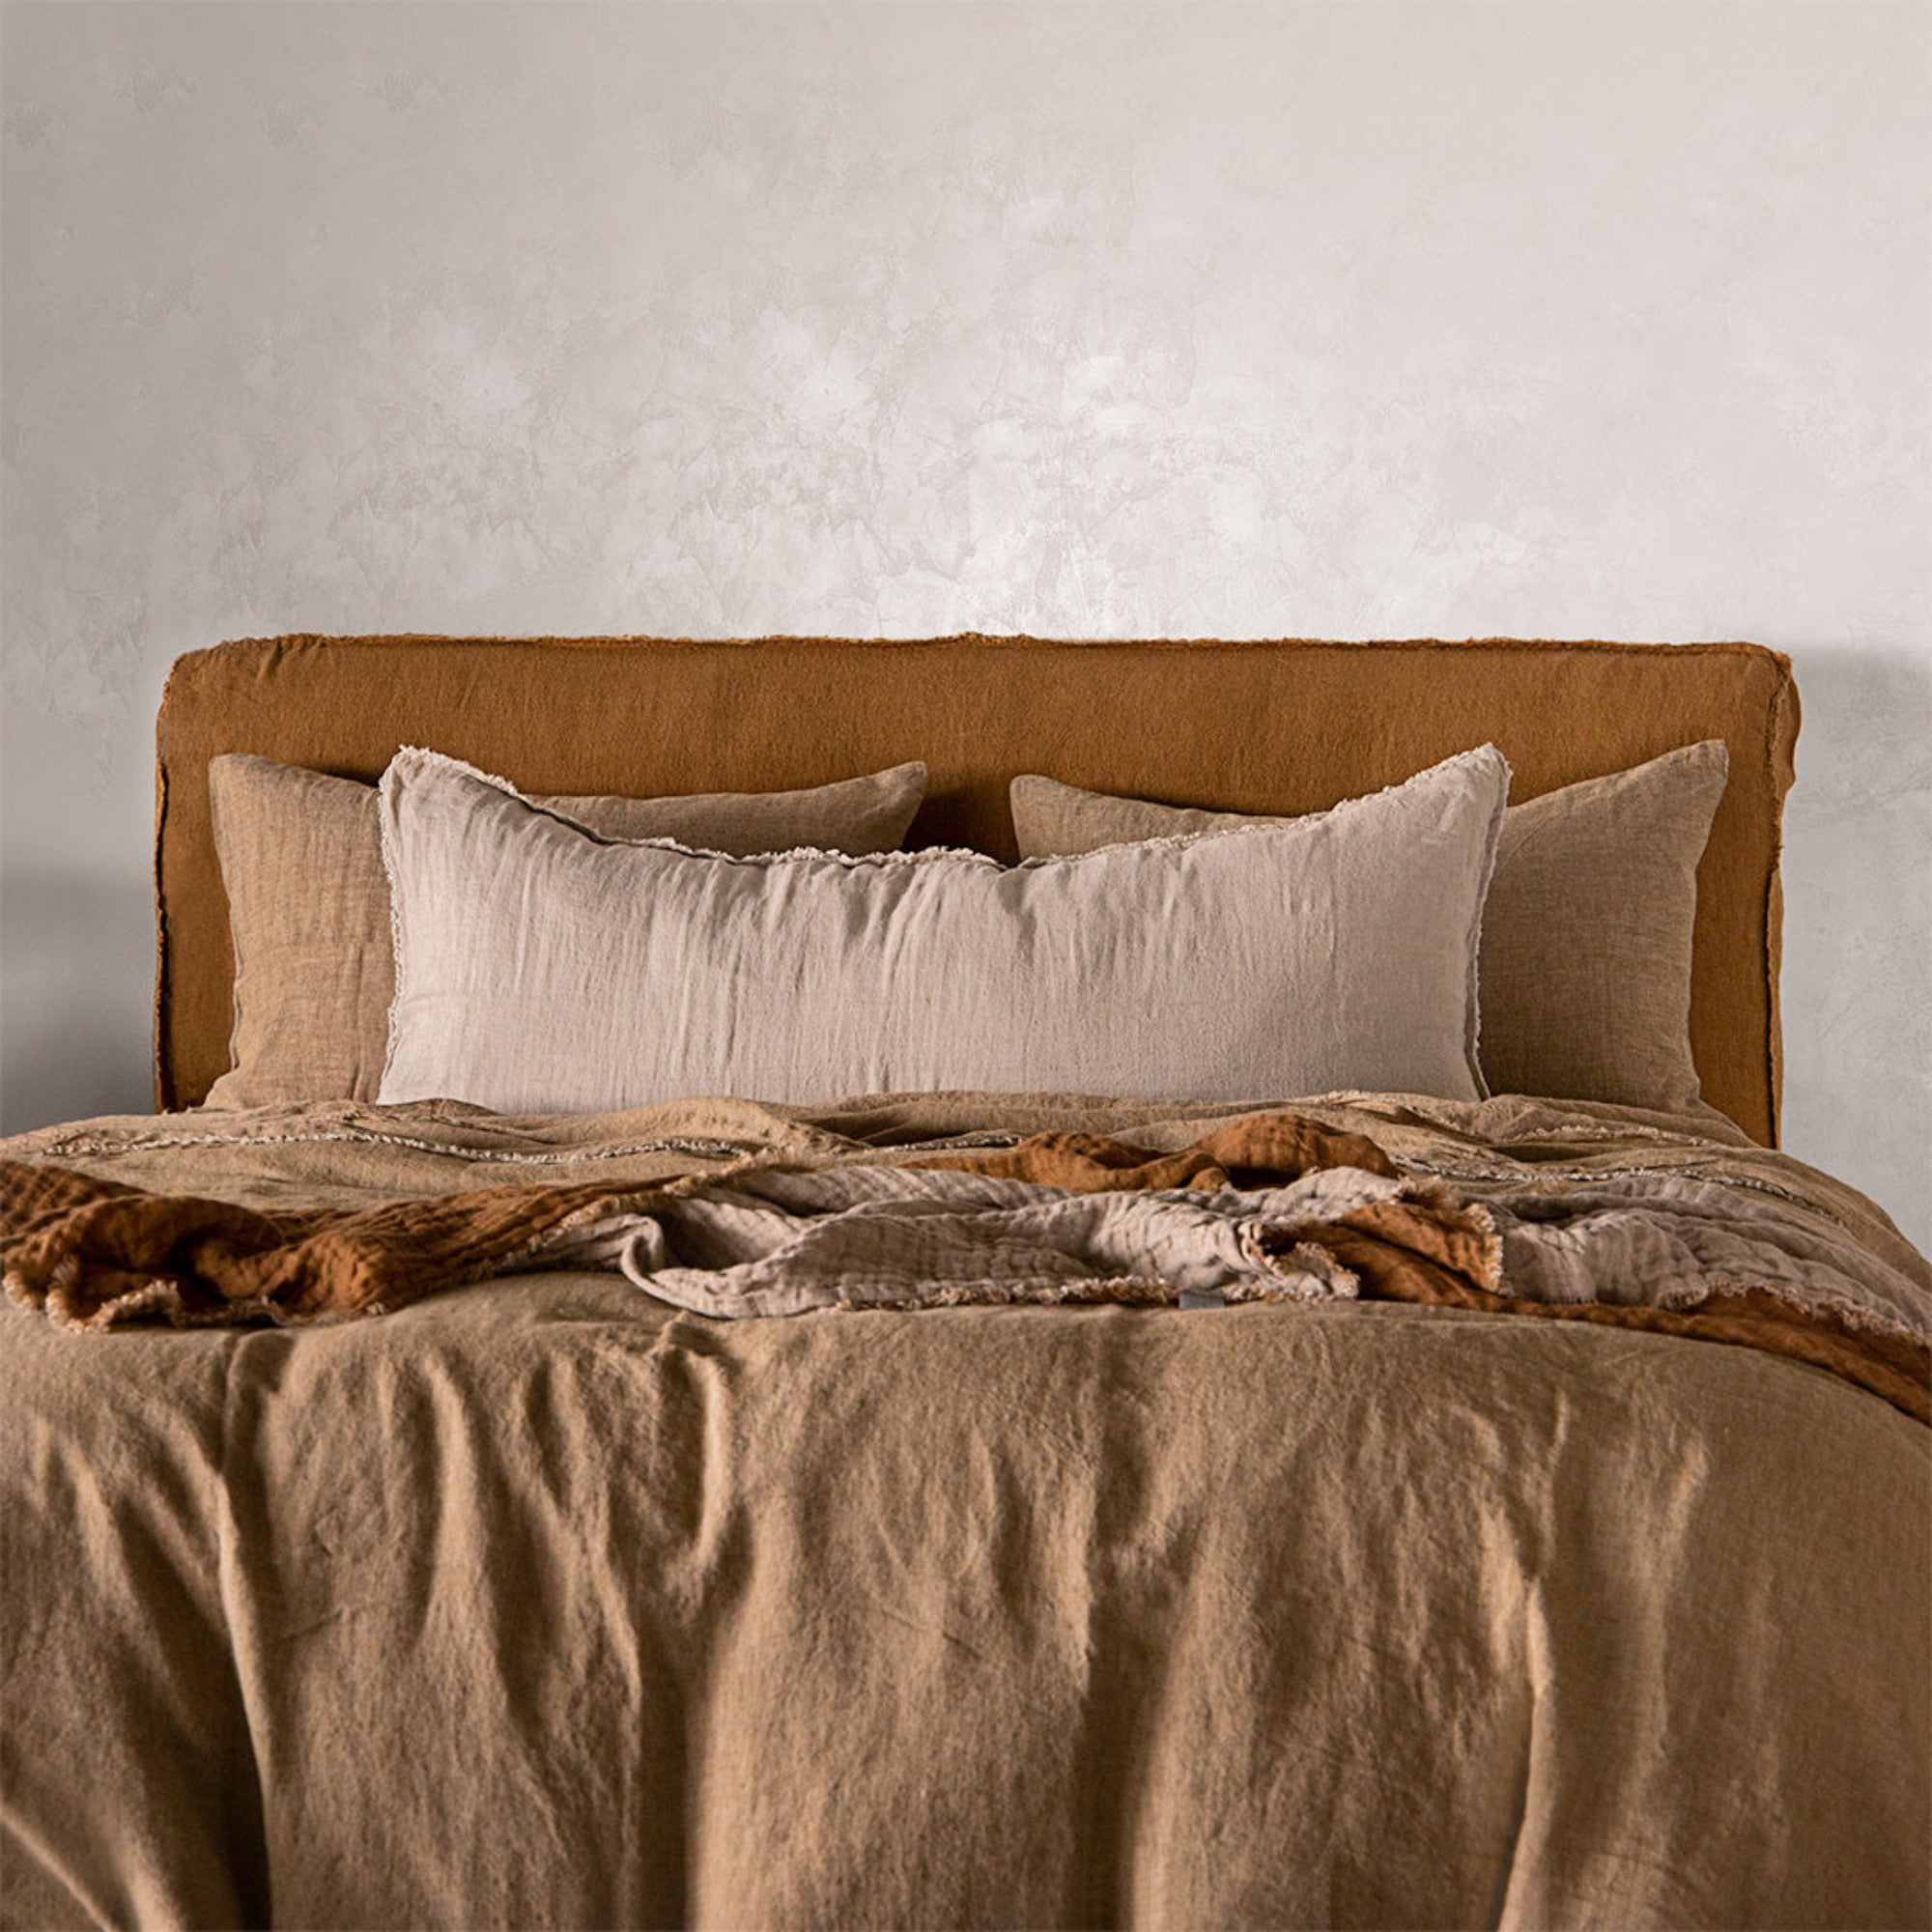 Basix Linen Pillowcase | Rich Toffee | Hale Mercantile Co.